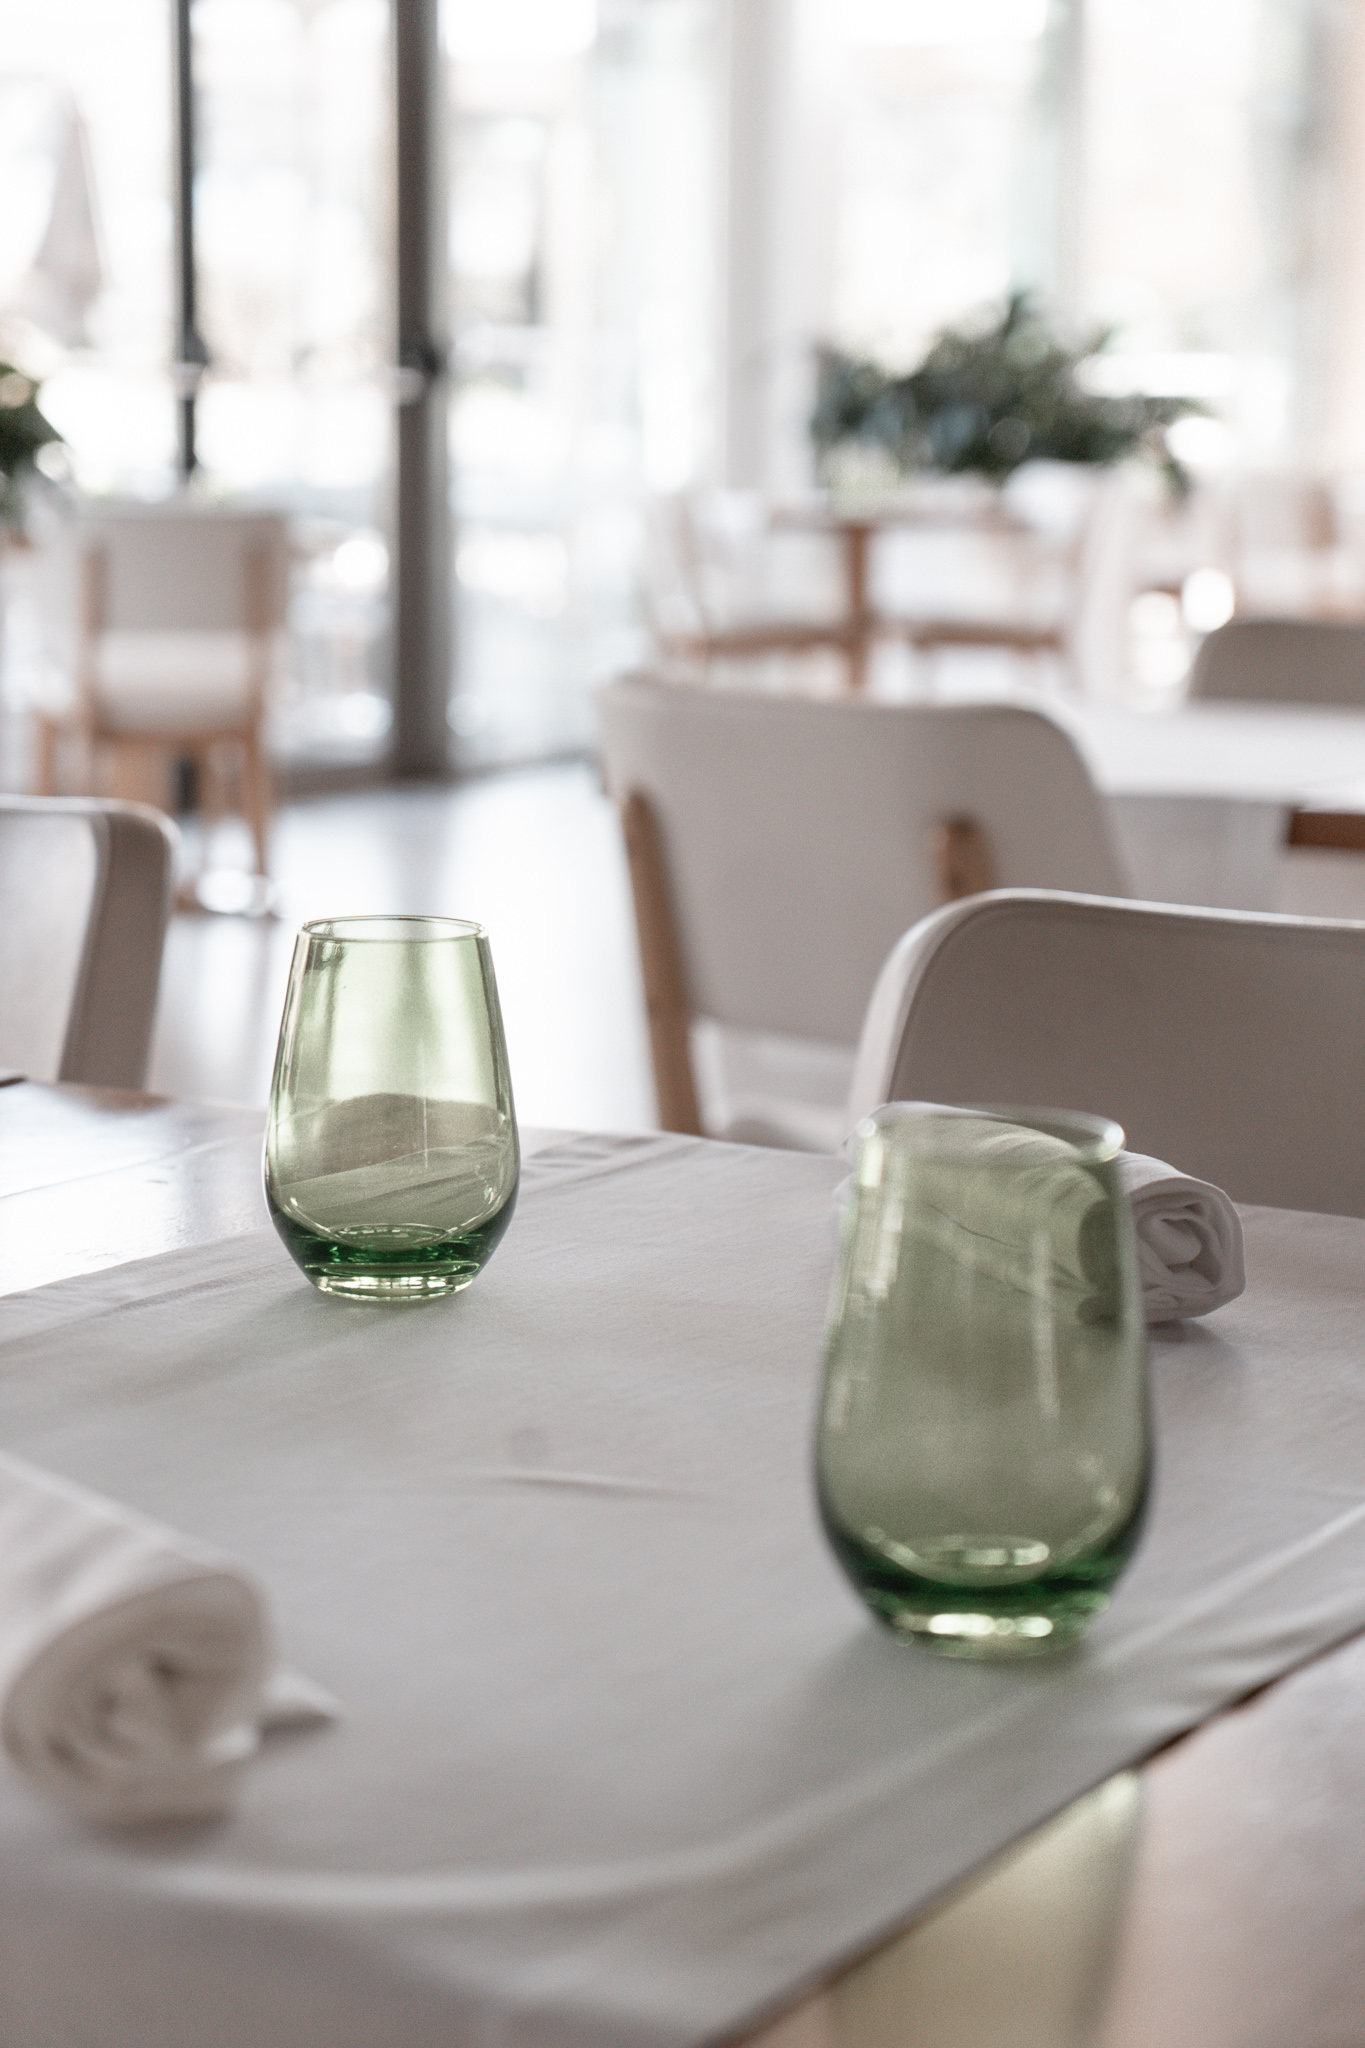 Martinhal Cascais-Restaurant-O Terraco-Details-Tische-Gläser-livingelements